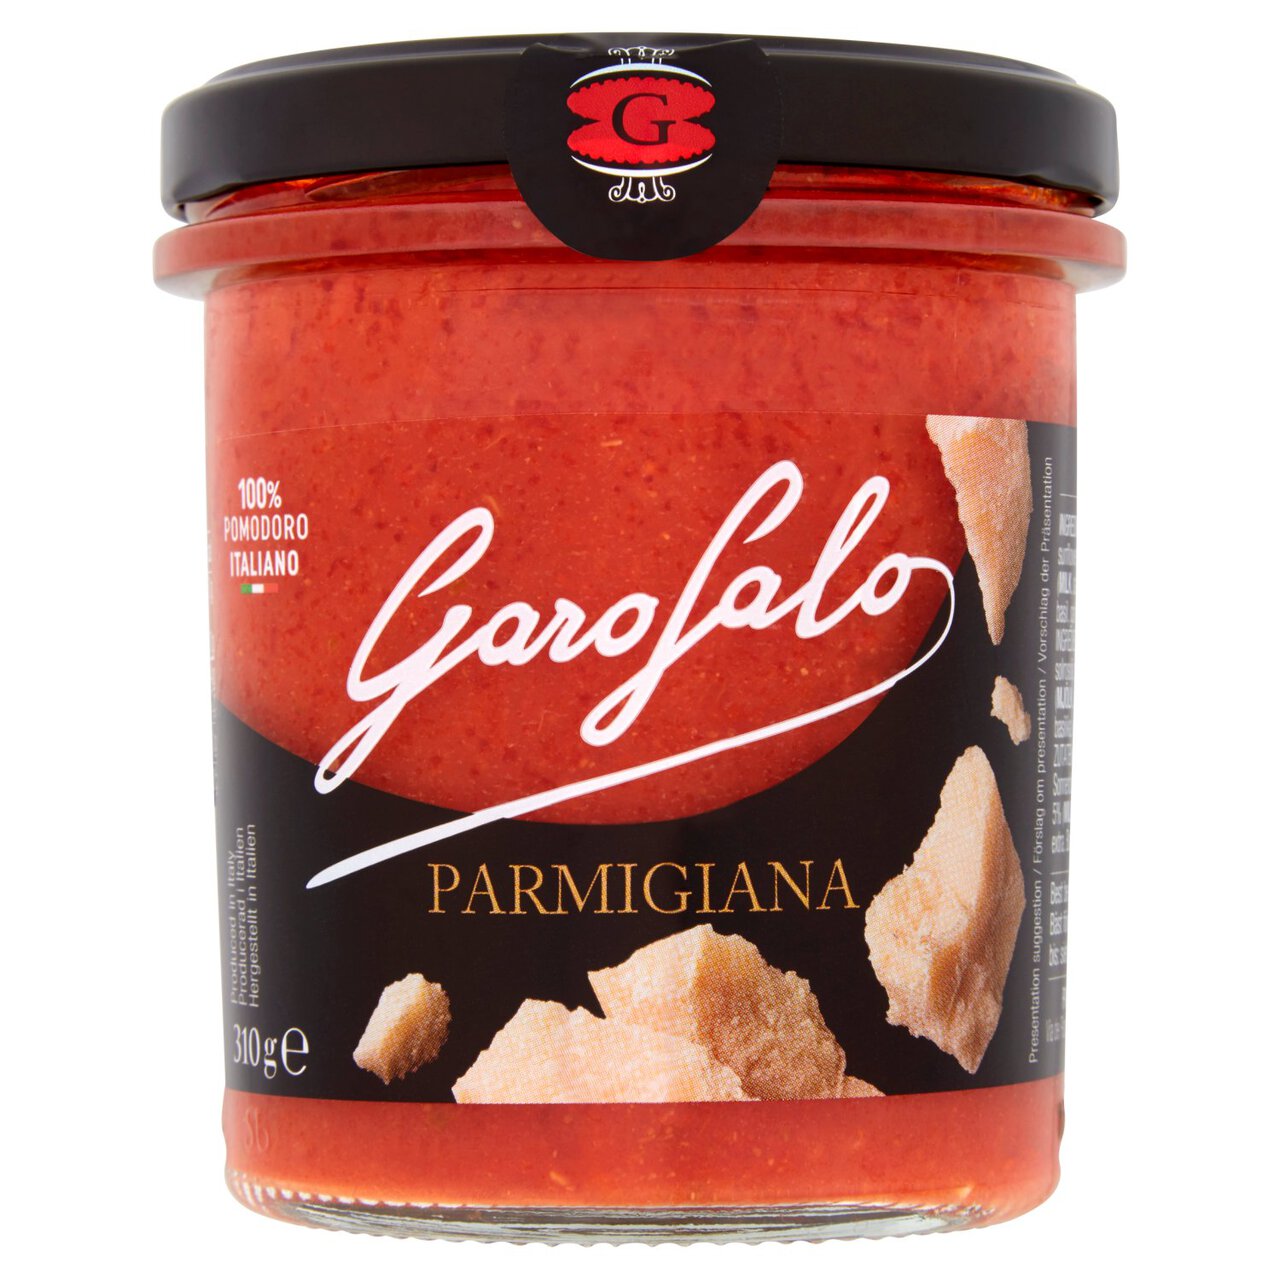 Garofalo Parmigiana Pasta sauce 310g